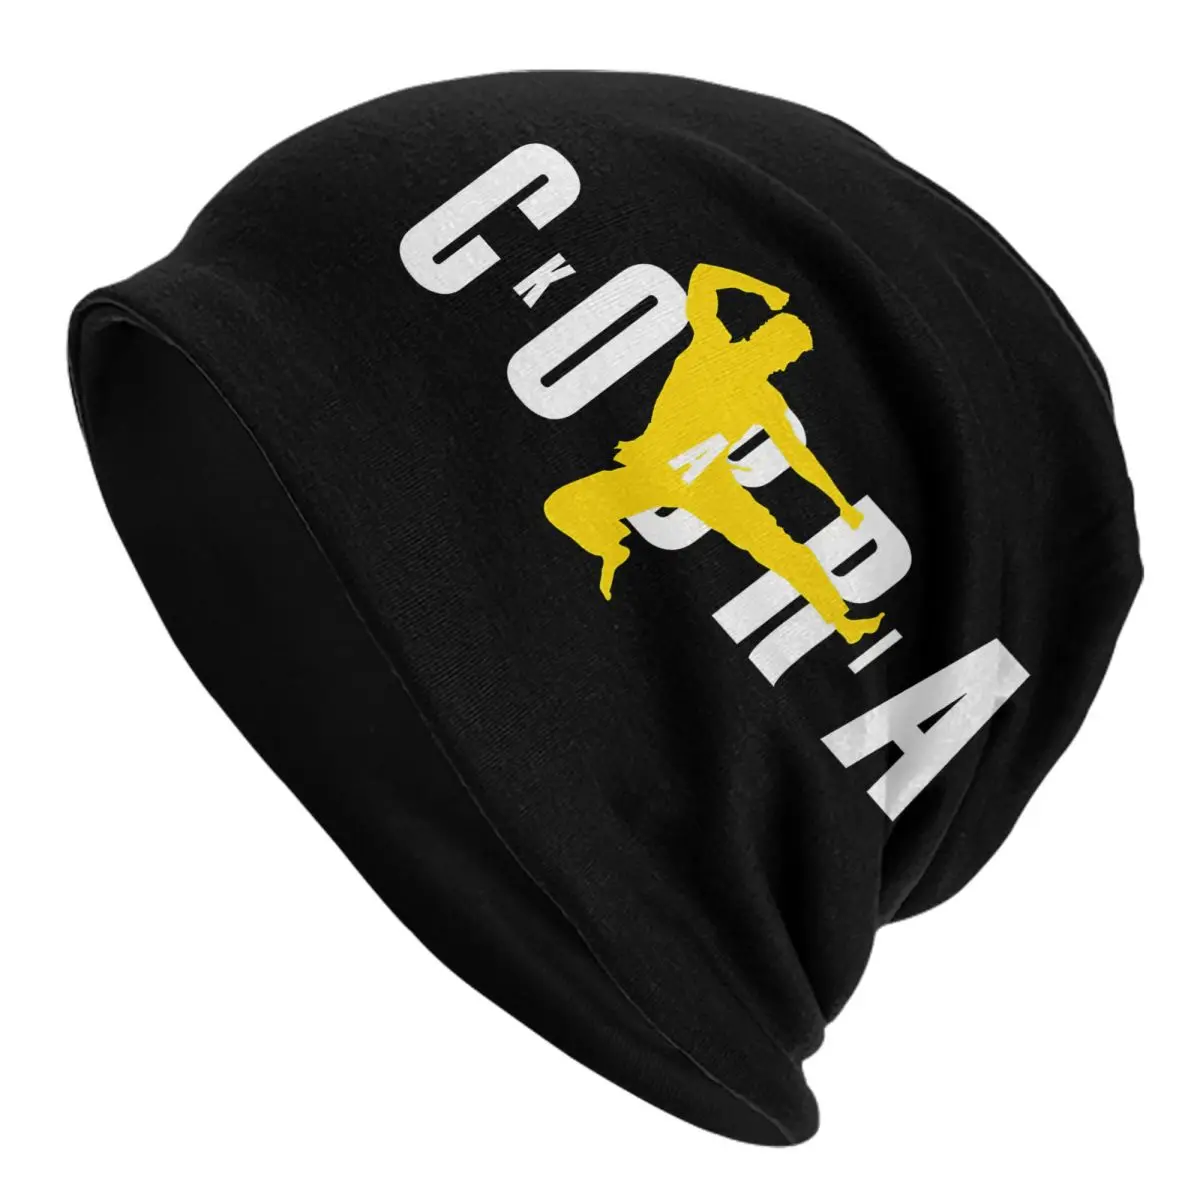 Hobby Karate Kair Cobra Adult Men's Women's Knit Hat Keep warm winter Funny knitted hat